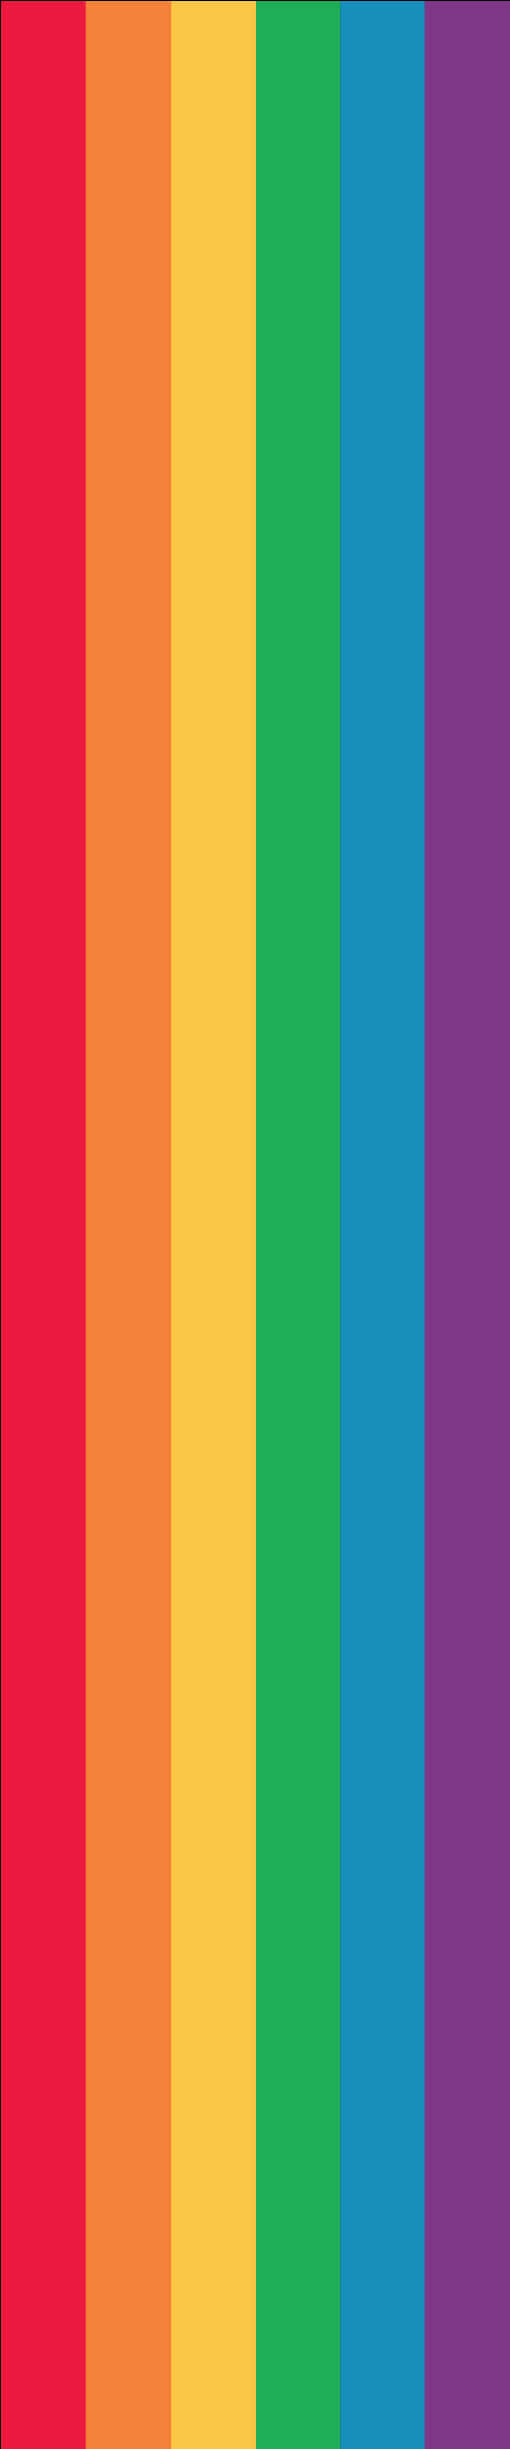 Vibrant Rainbow Stripes PNG